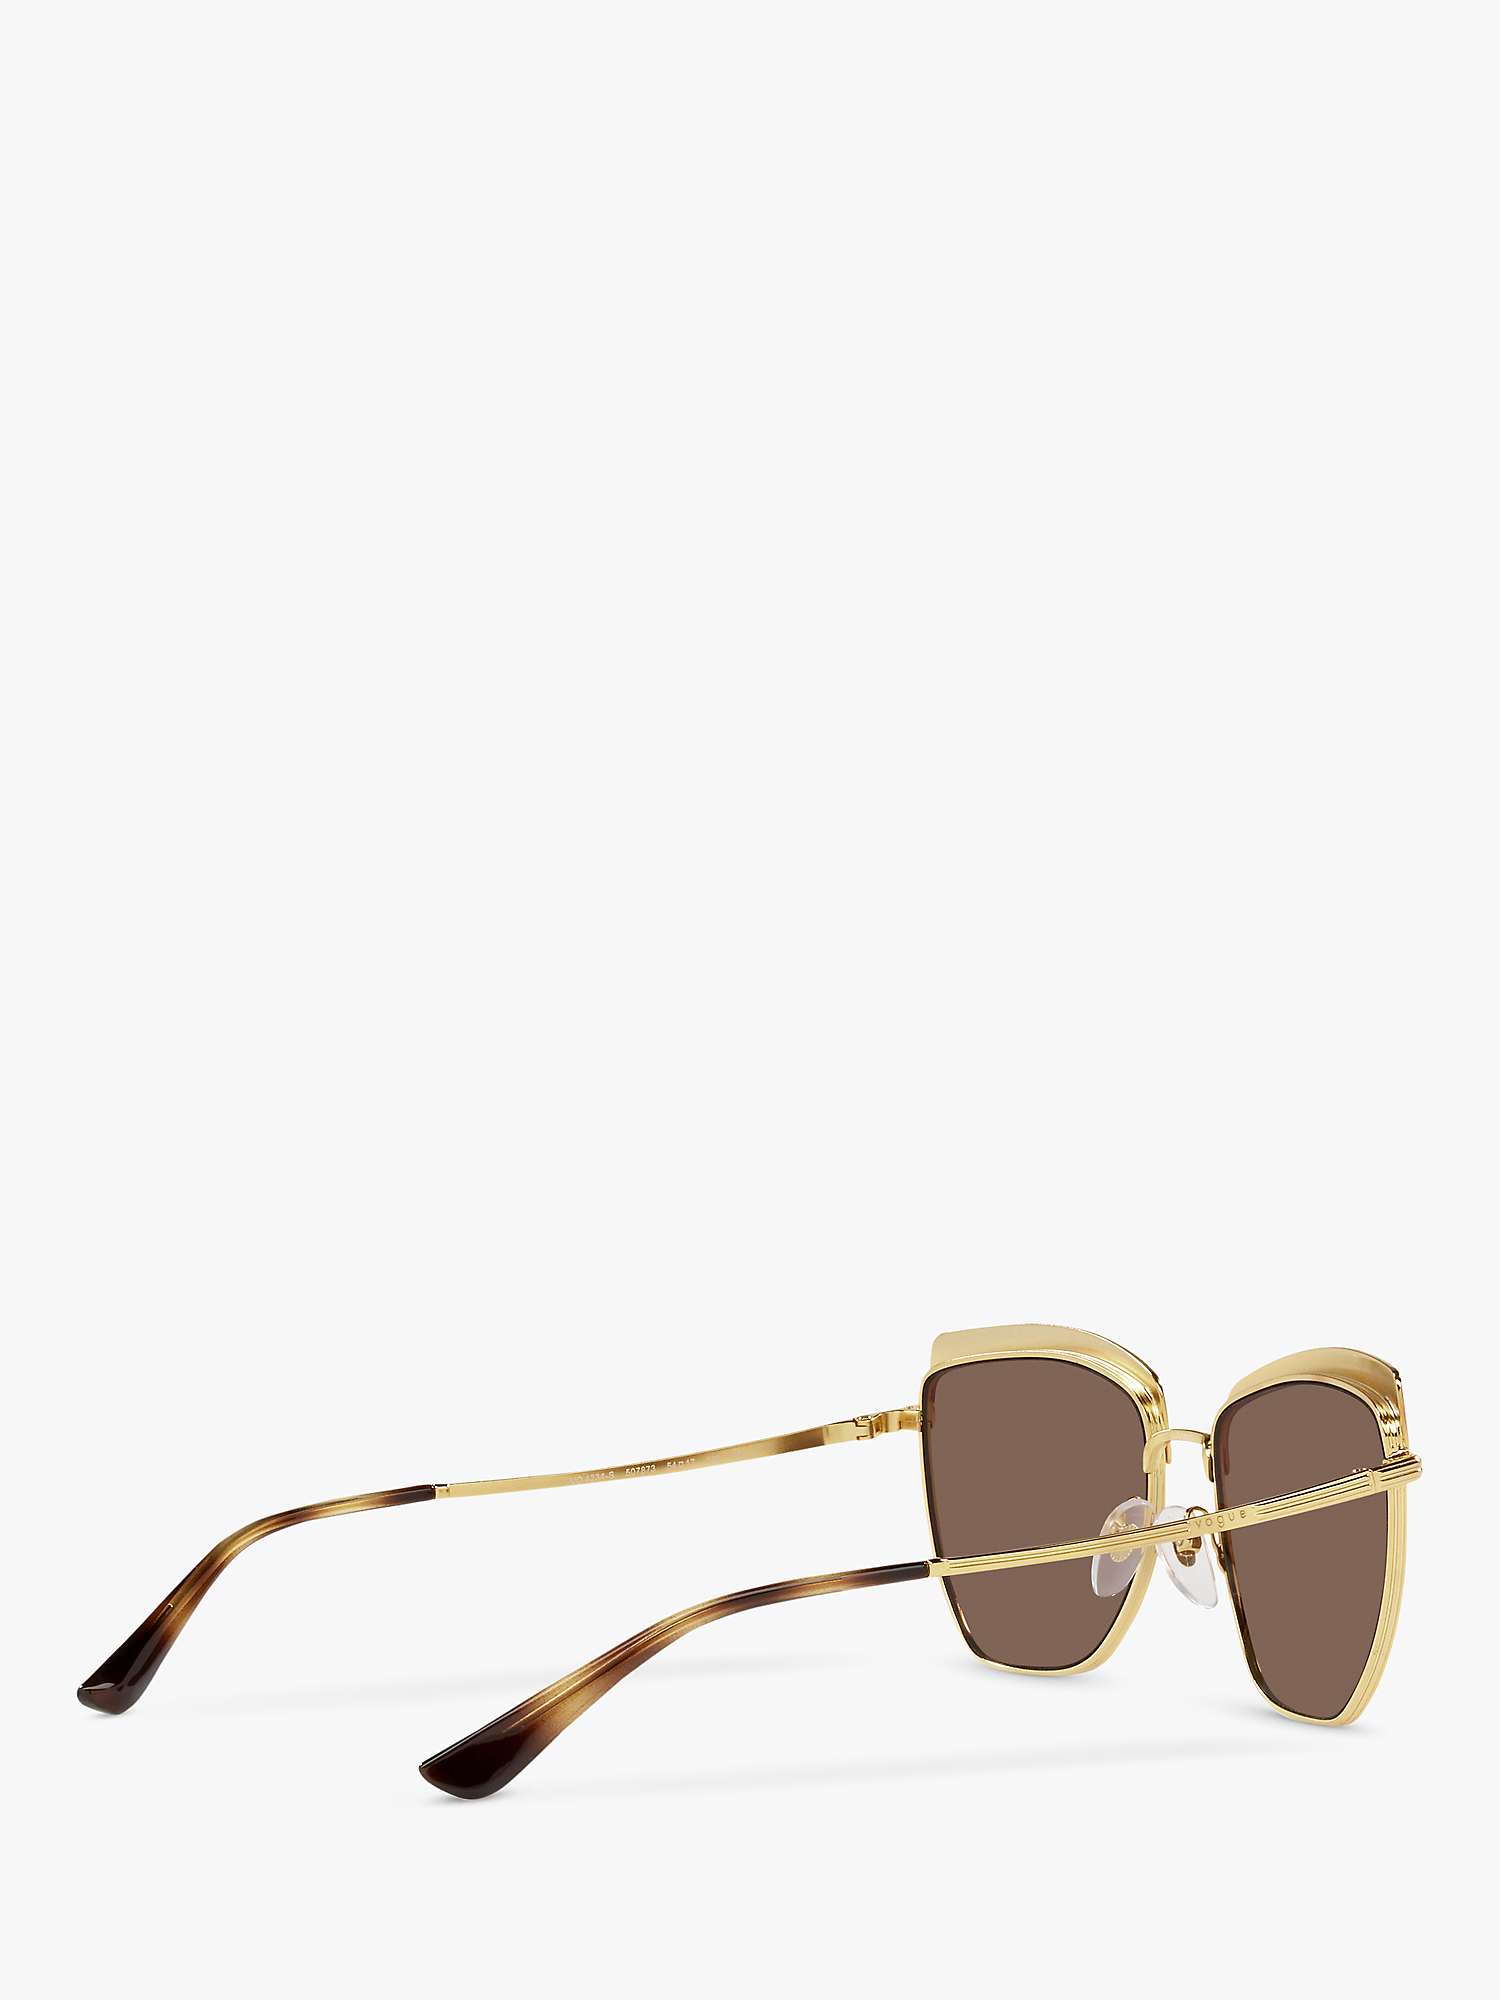 Buy Vogue VO4234S Women's Irregular Sunglasses, Gold/Brown Online at johnlewis.com